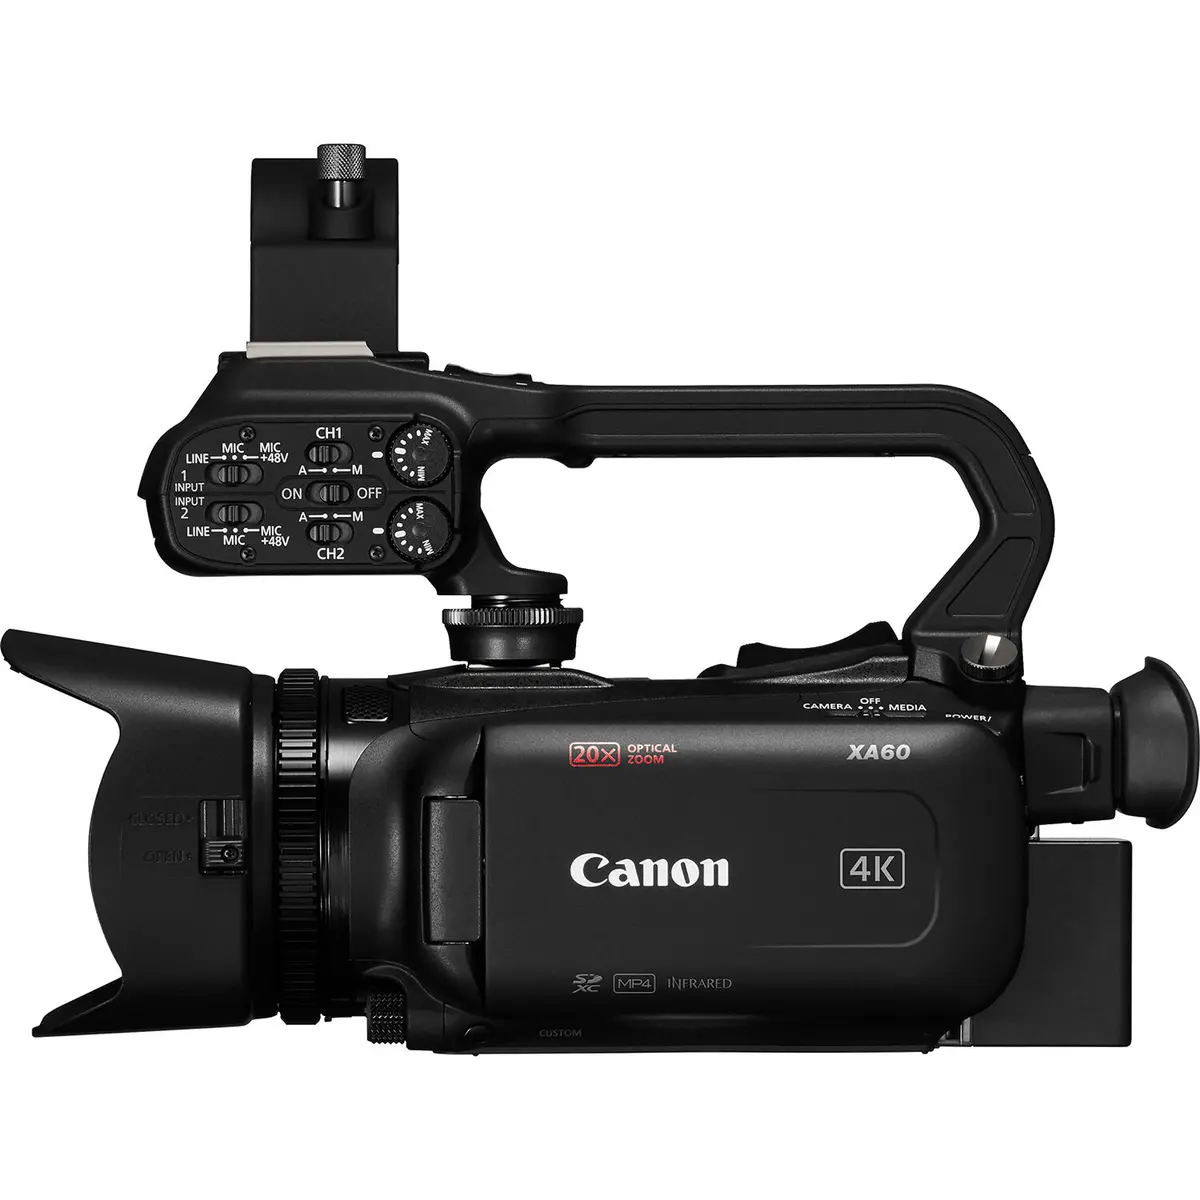 2. Canon XA60 Professional UHD 4K Camcorder